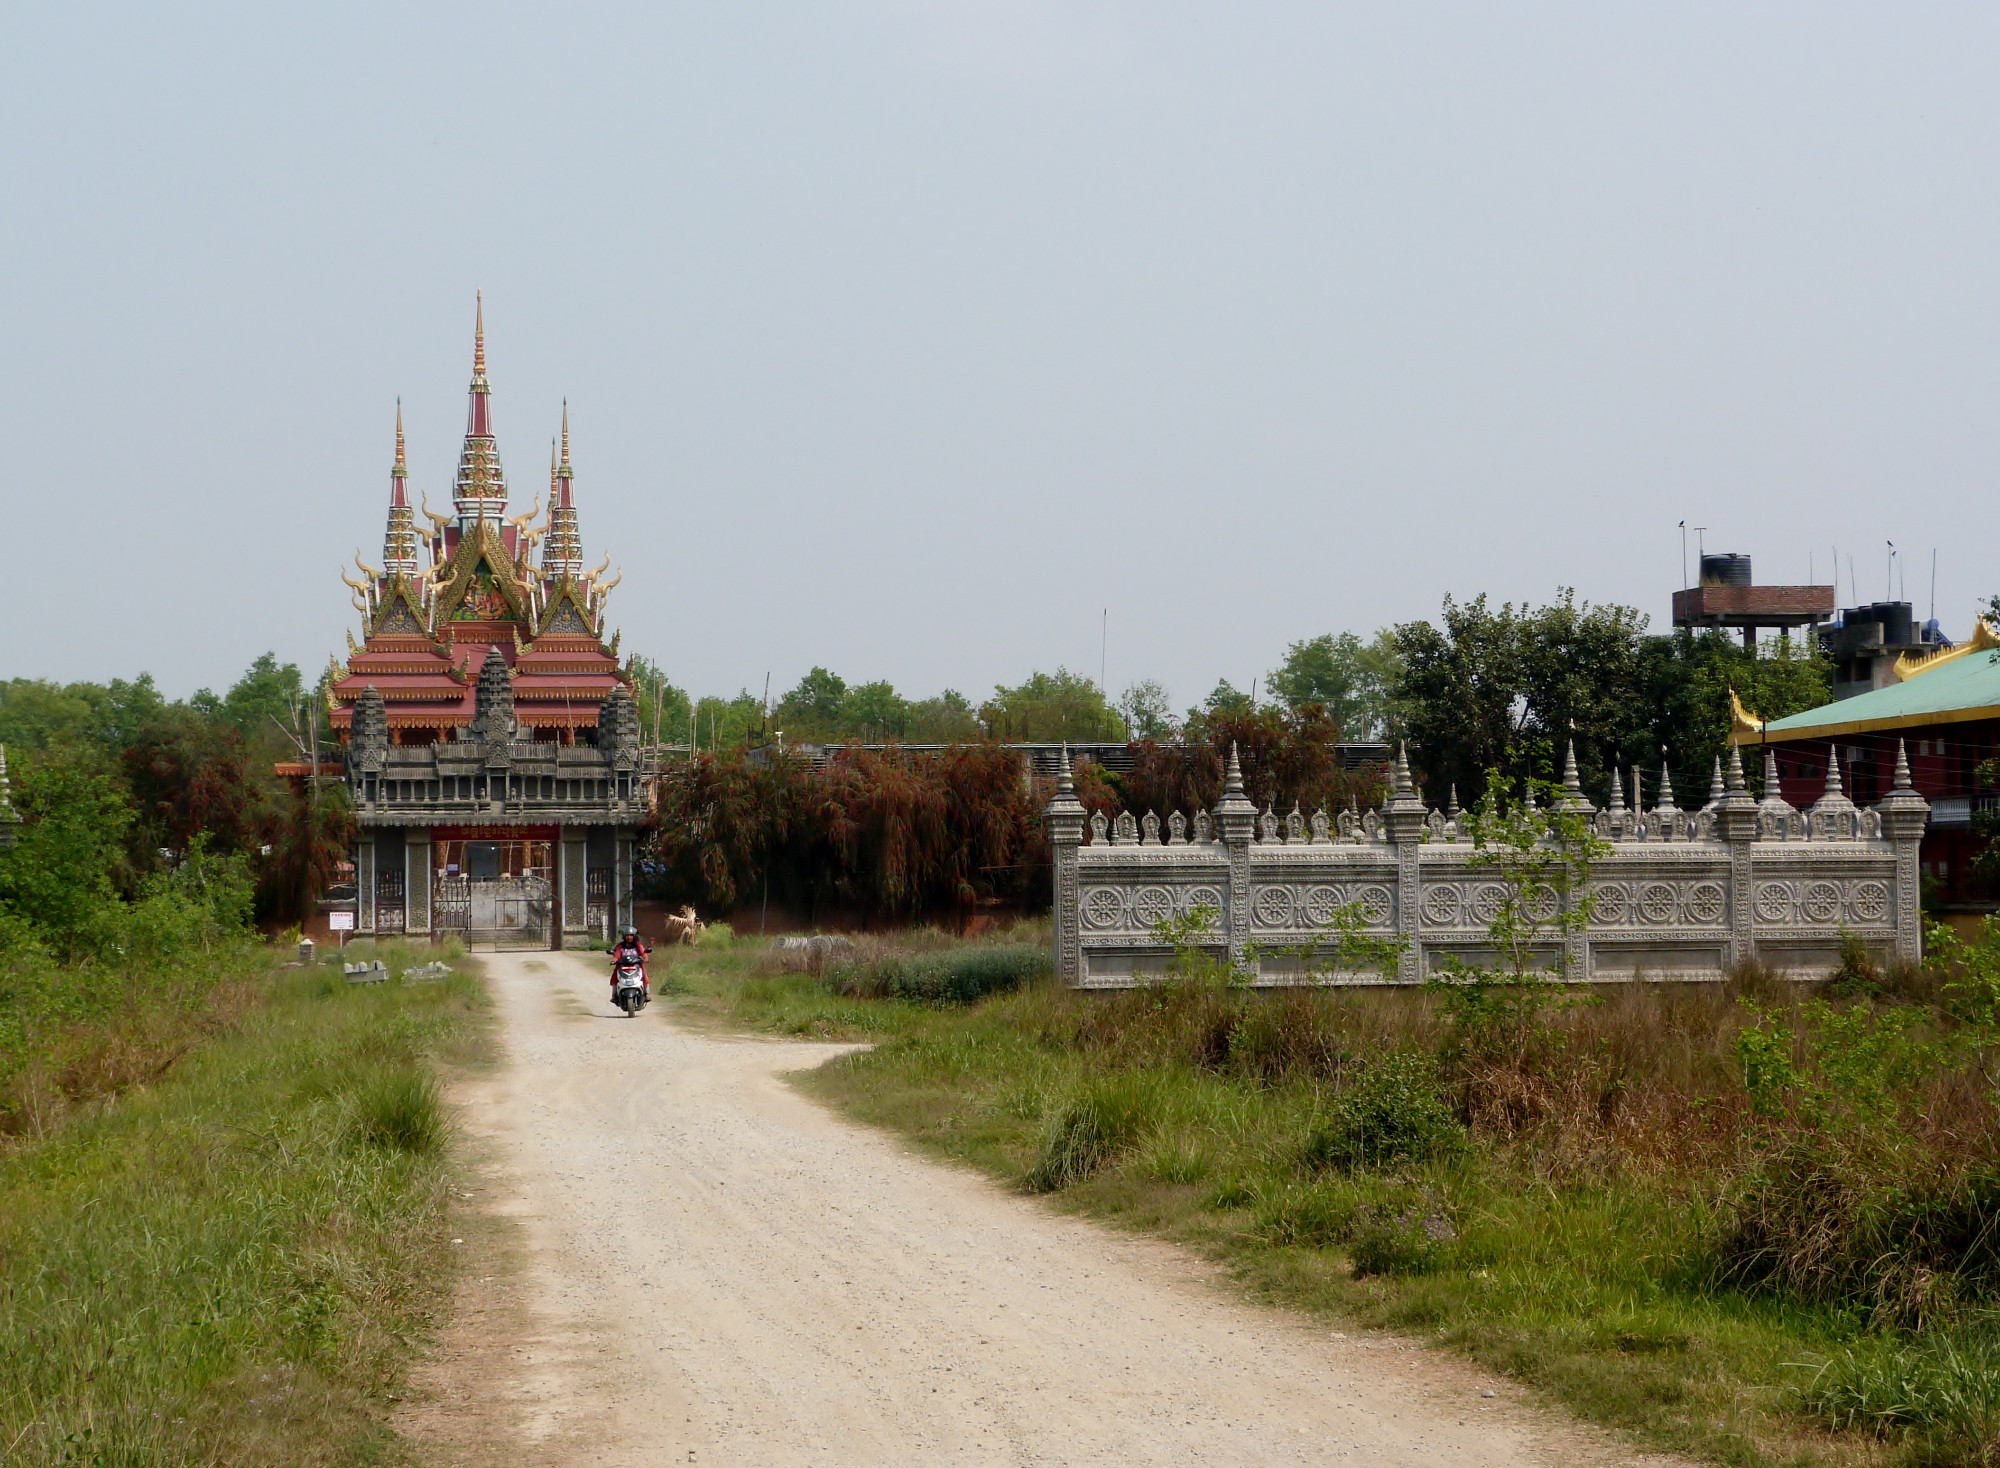 Mayanmar Monastery under construction